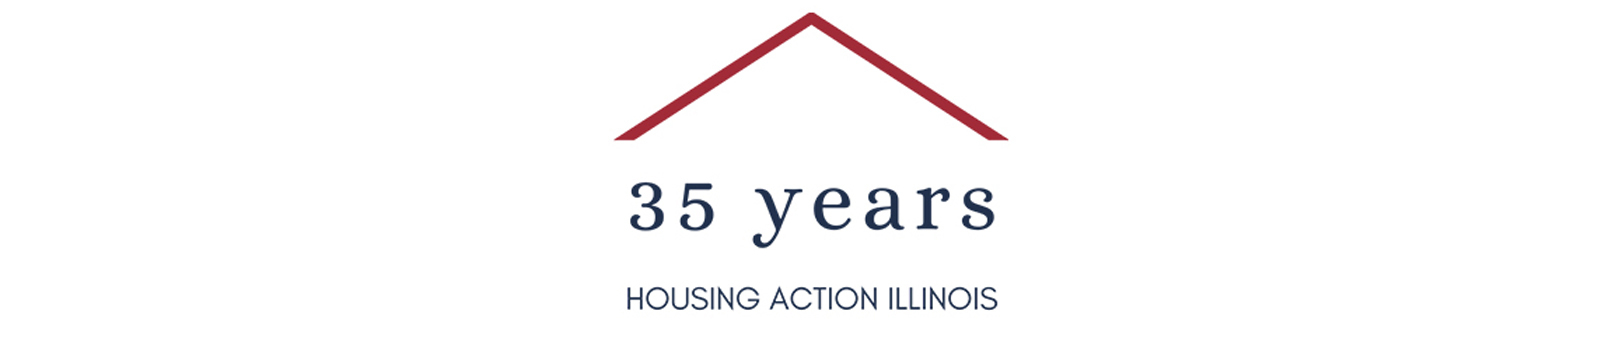 Housing Action Illinois, 35th anniversary logo